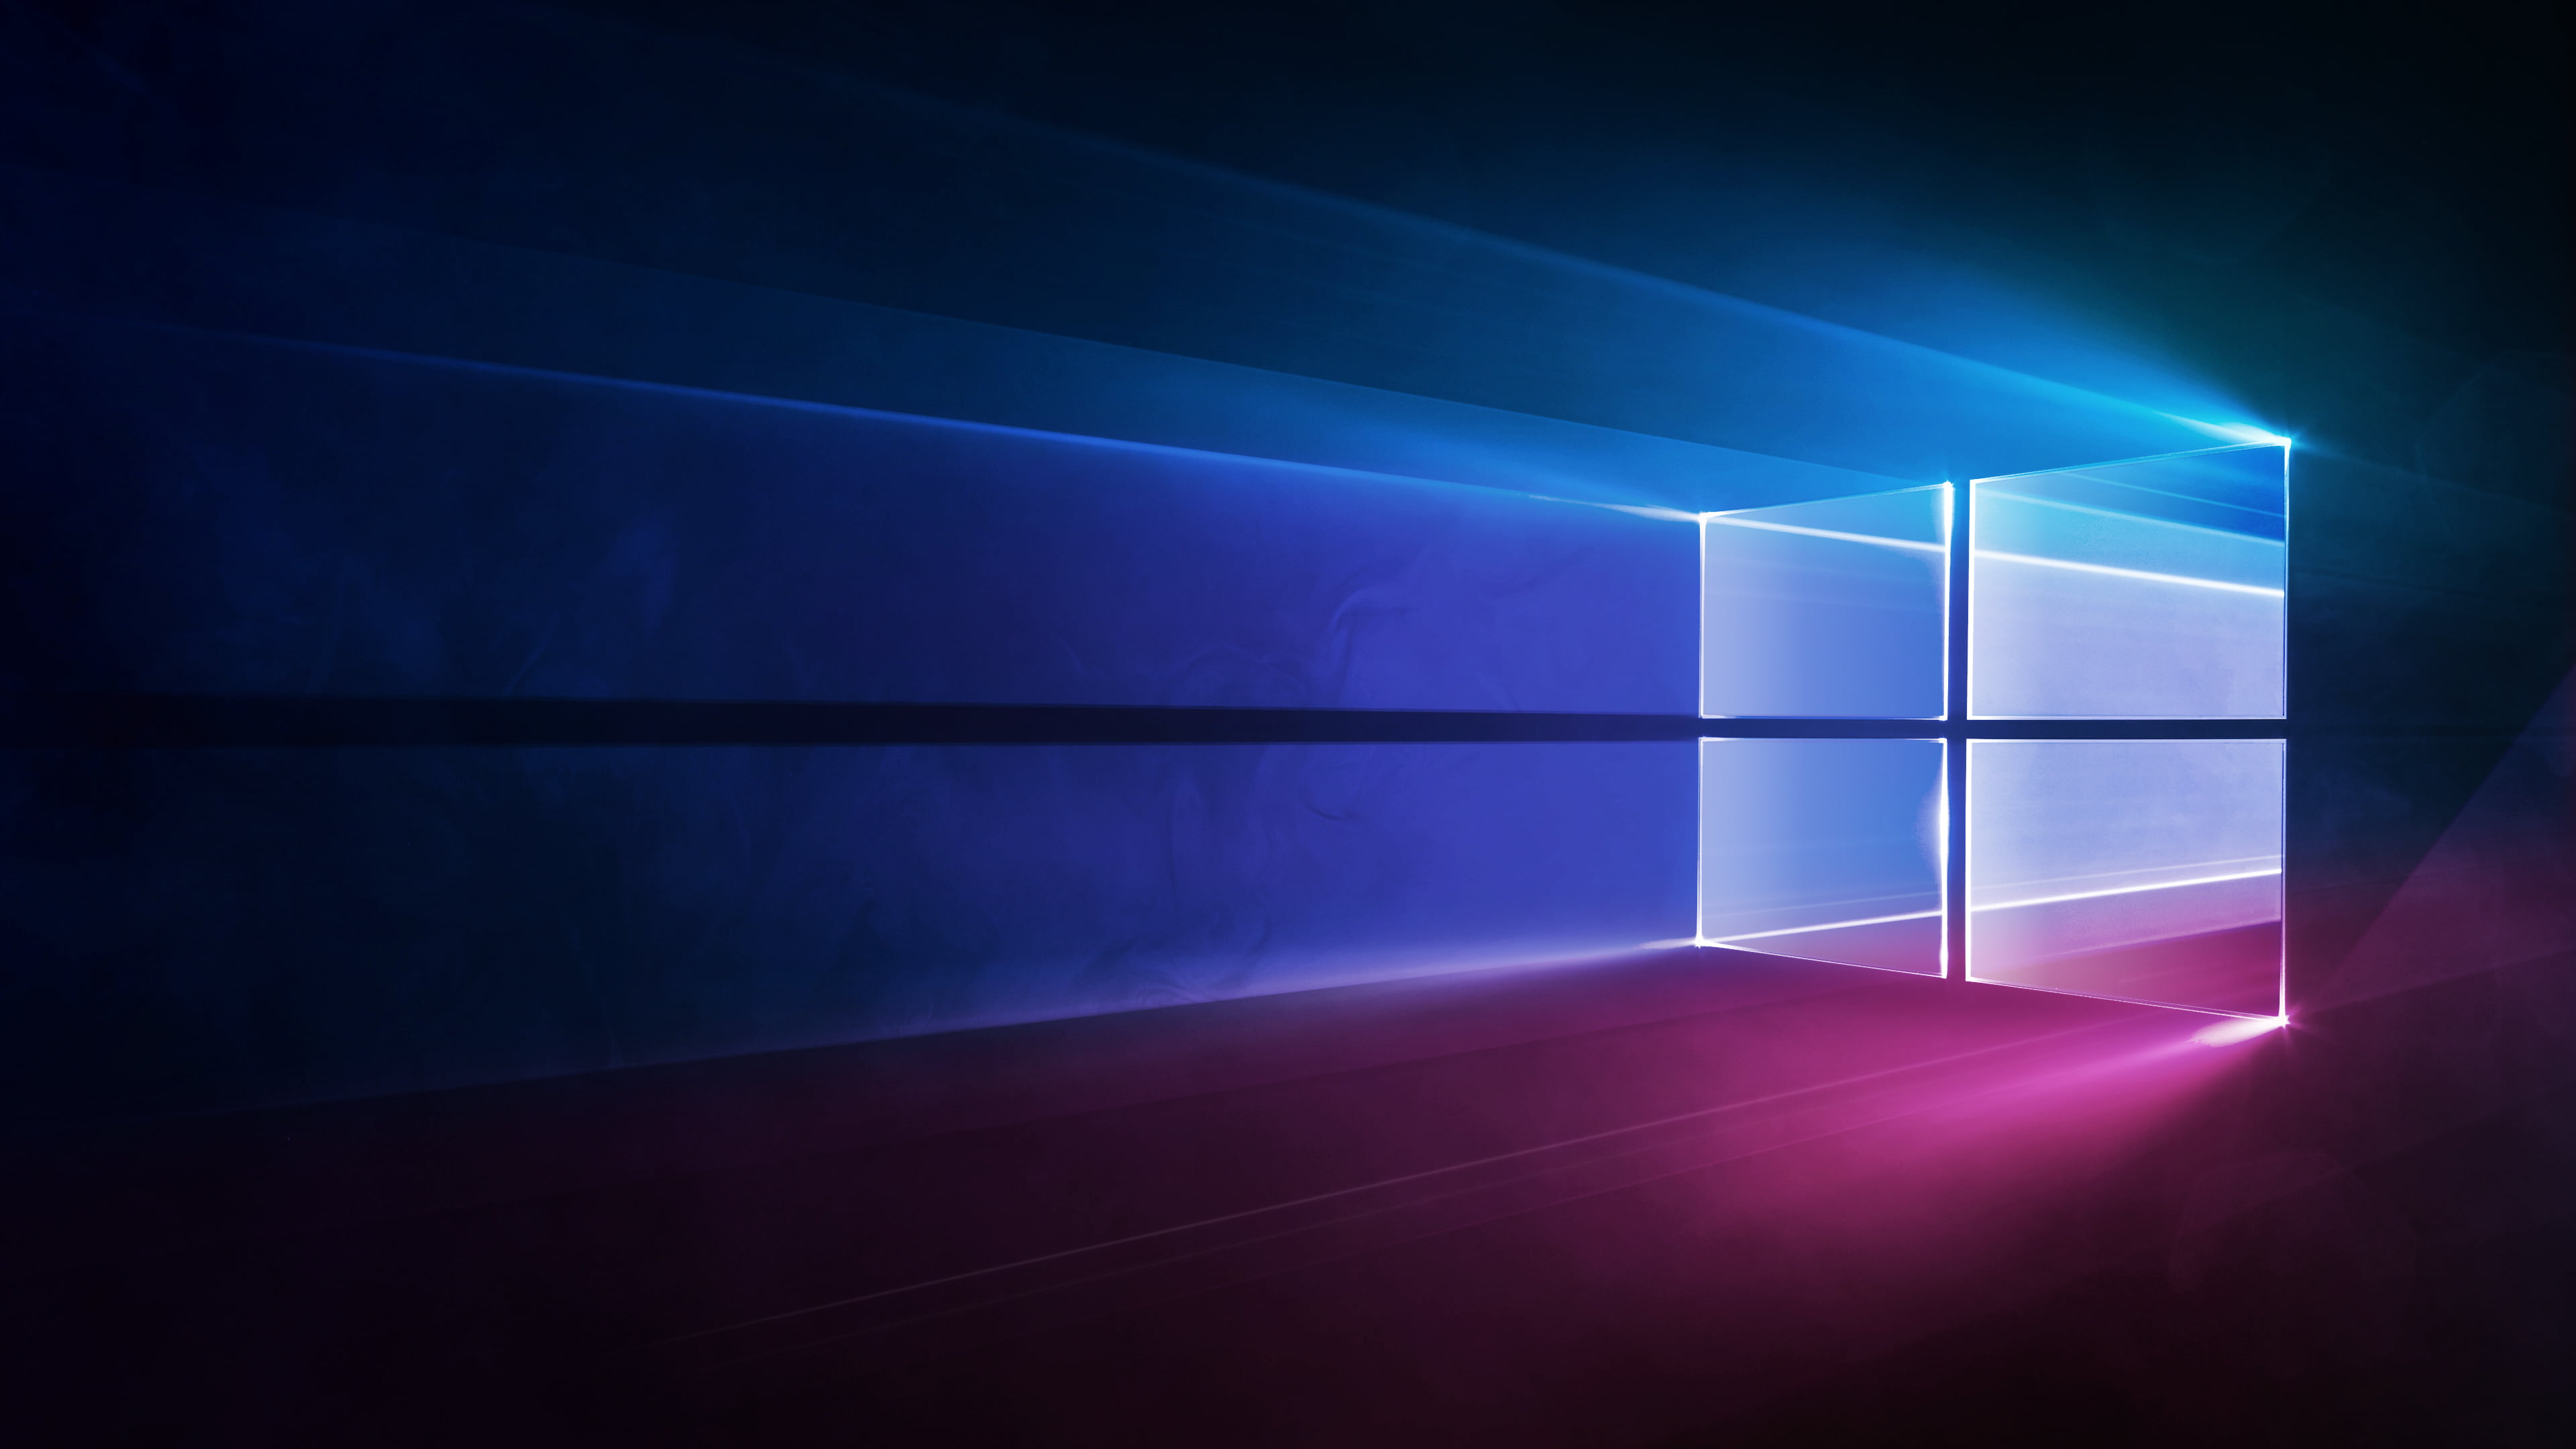 Windows wallpaper, windows10, Microsoft, blue, light - natural phenomenon